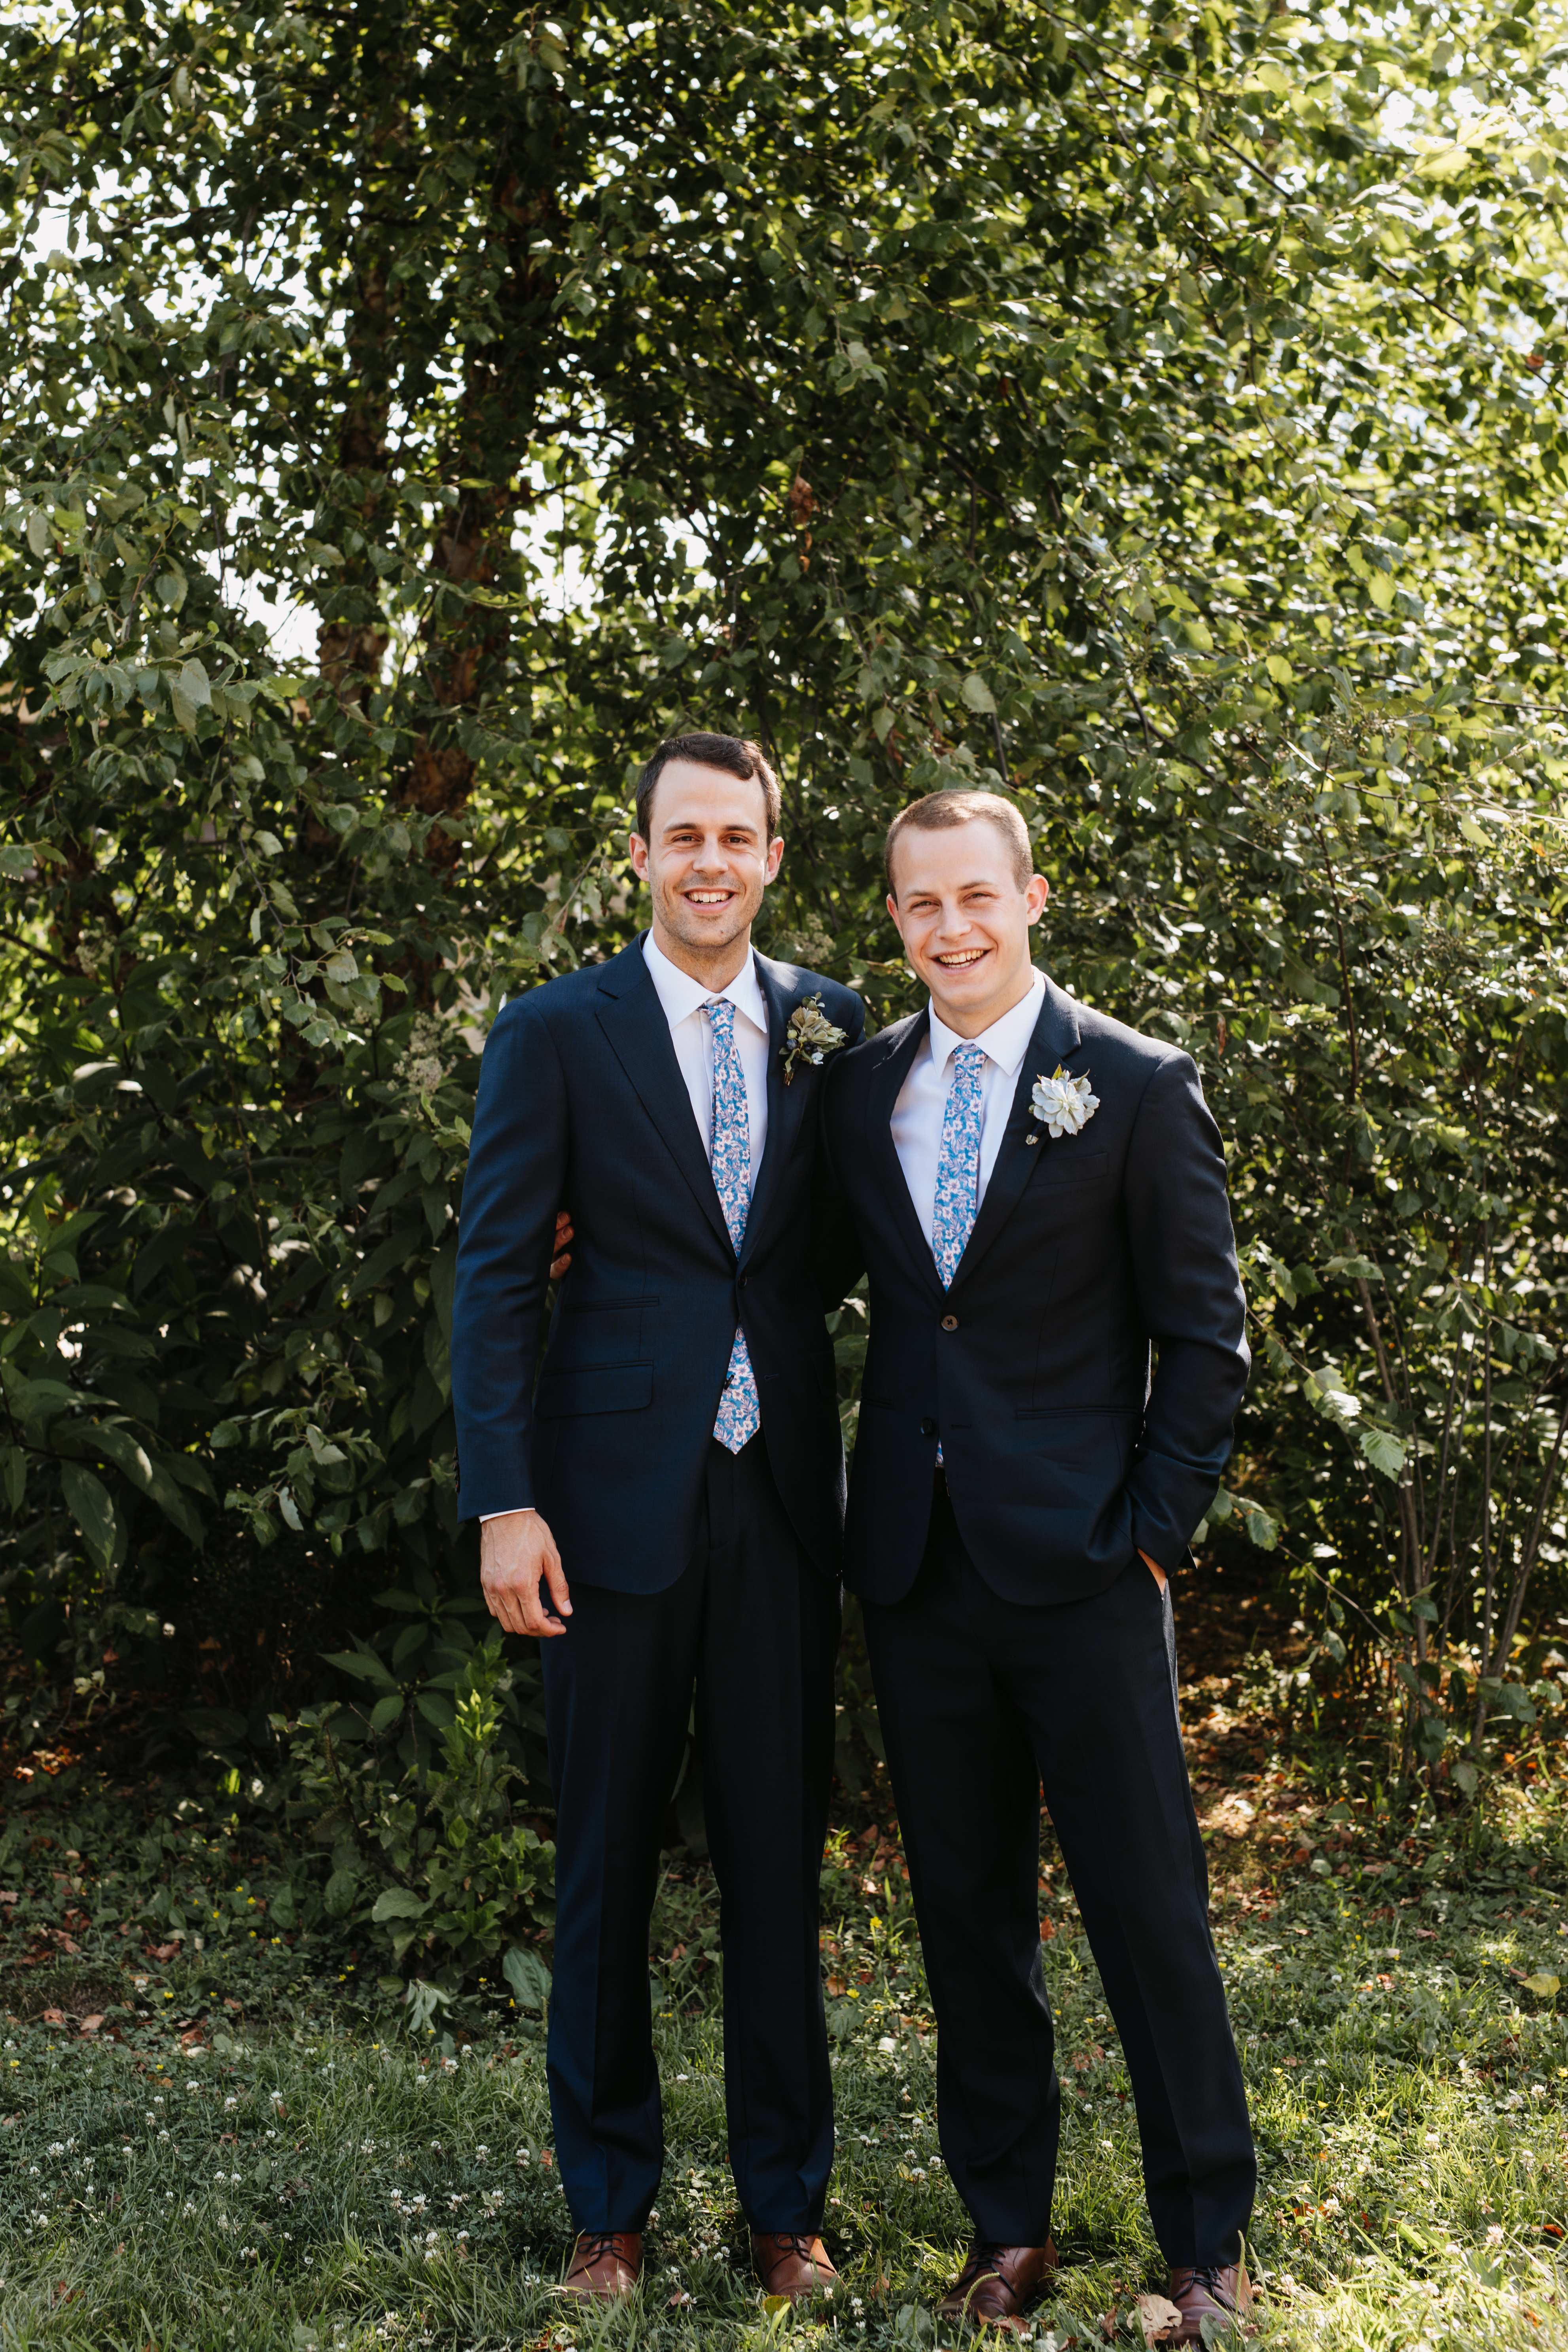 groom and groomsmen in navy suits with paisley ties